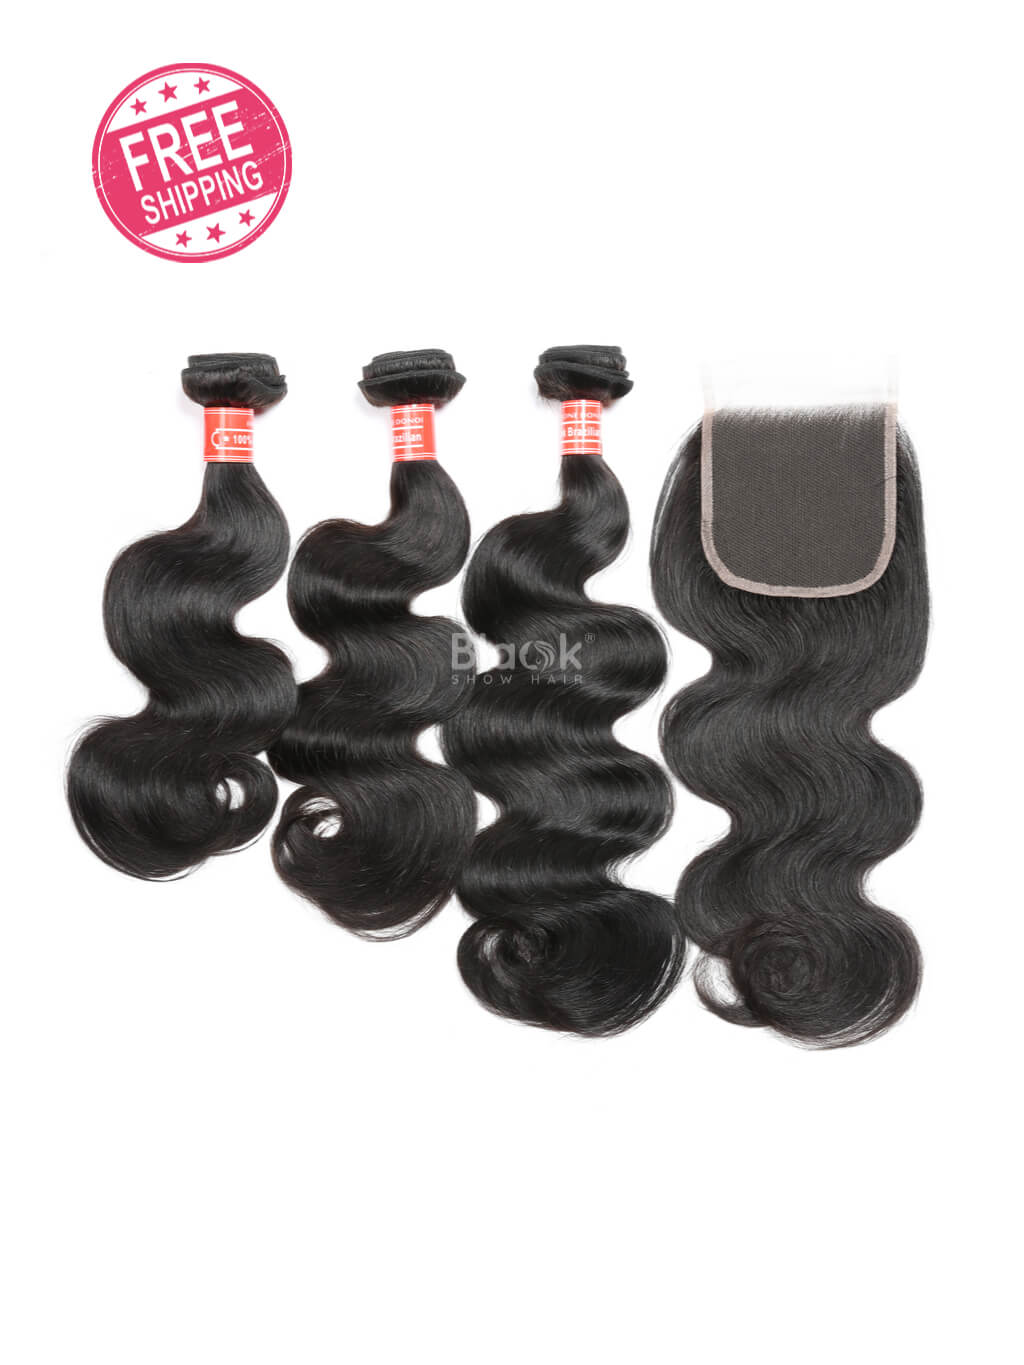 body wave bundles with closure 4x4 mink brazilian hair